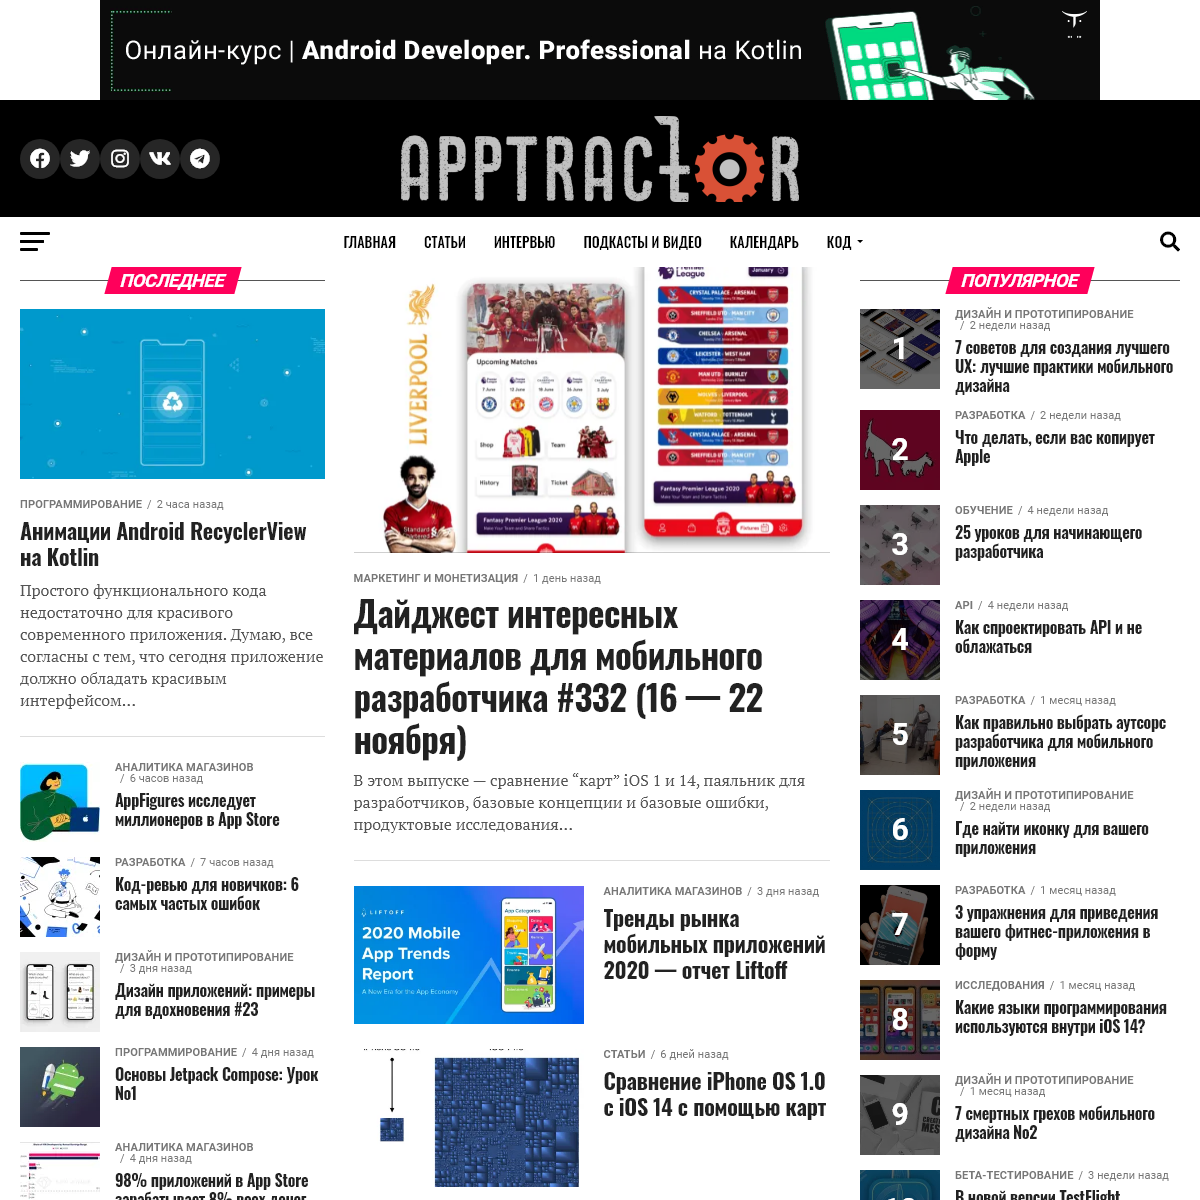 A complete backup of apptractor.ru